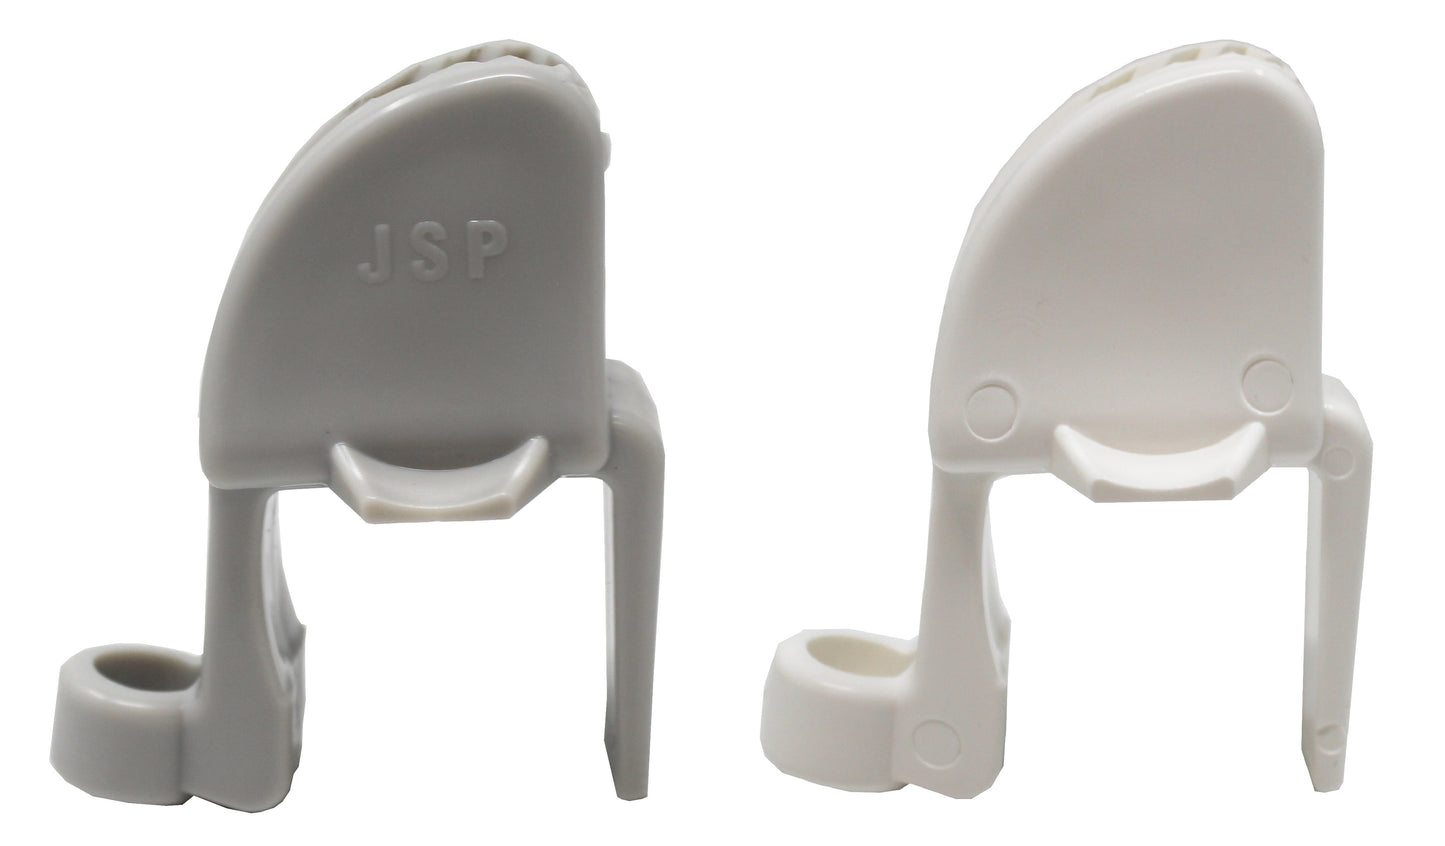 Plastic Pontoon Boat Square Rail Fender Adjuster Clip for Bumpers - Grey or White